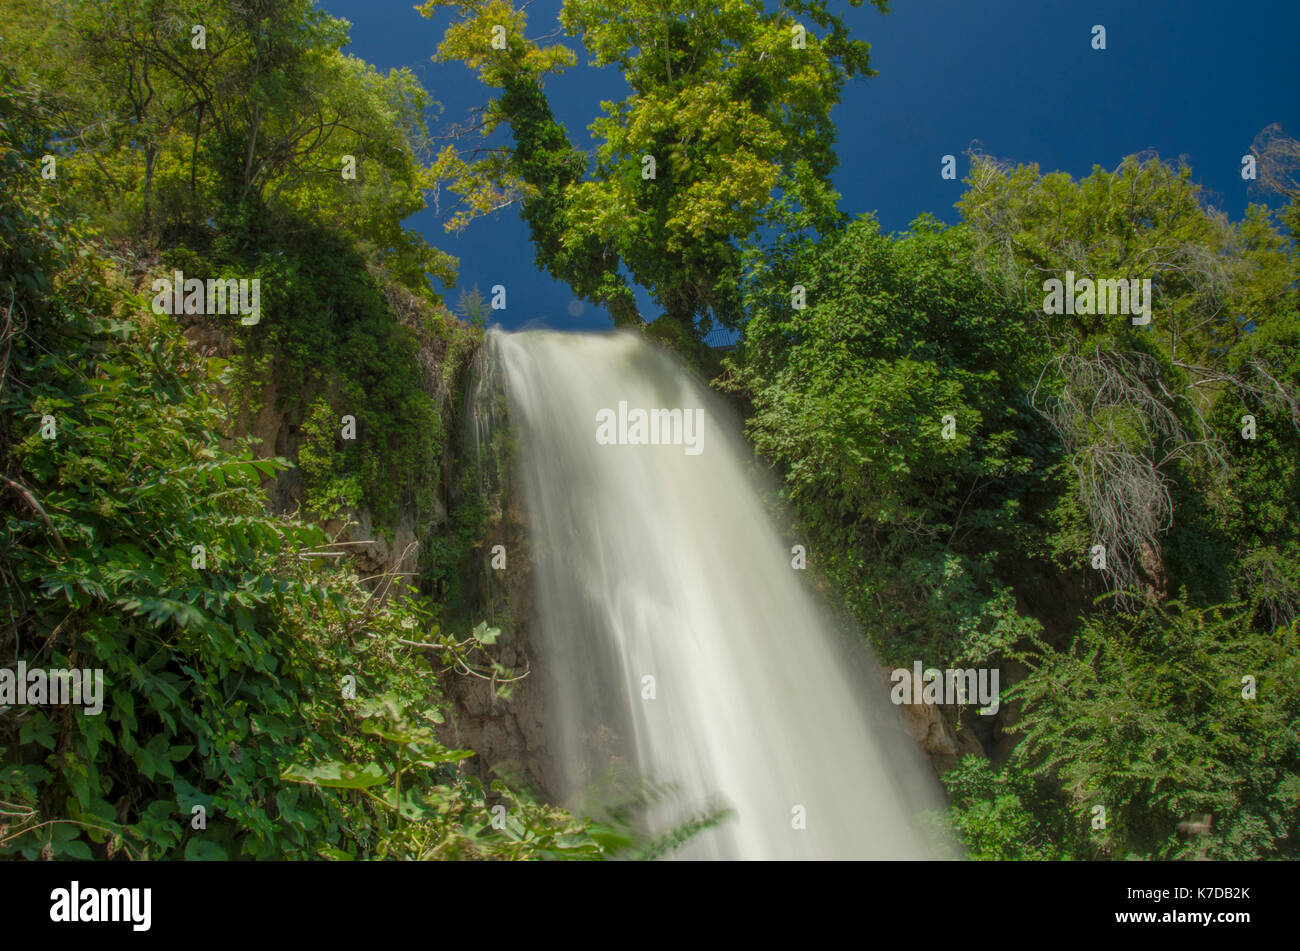 Wasserfall Szene - Langzeitbelichtung - Edessa, Griechenland Stockfoto